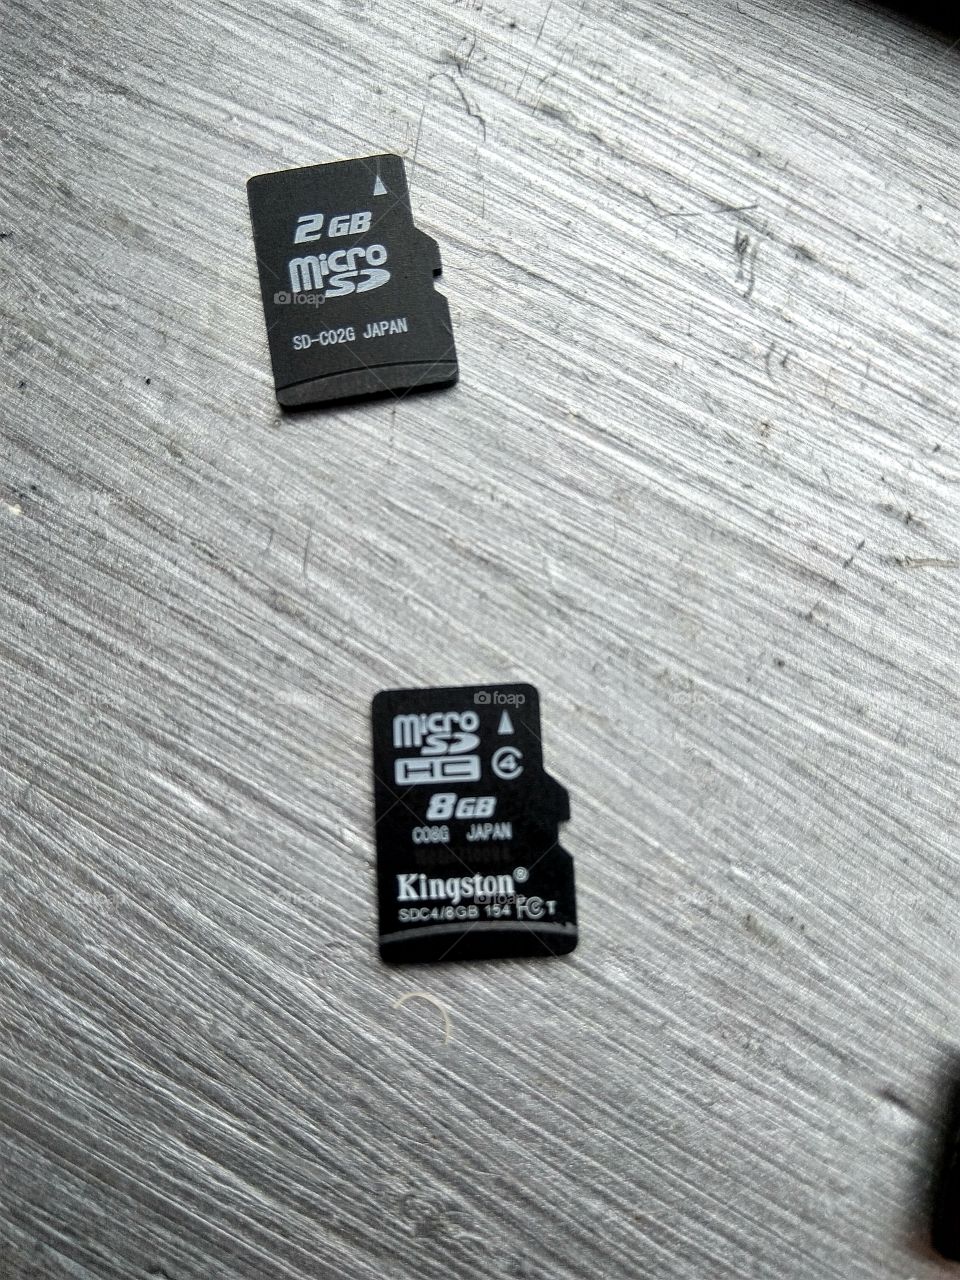 micro SD cards